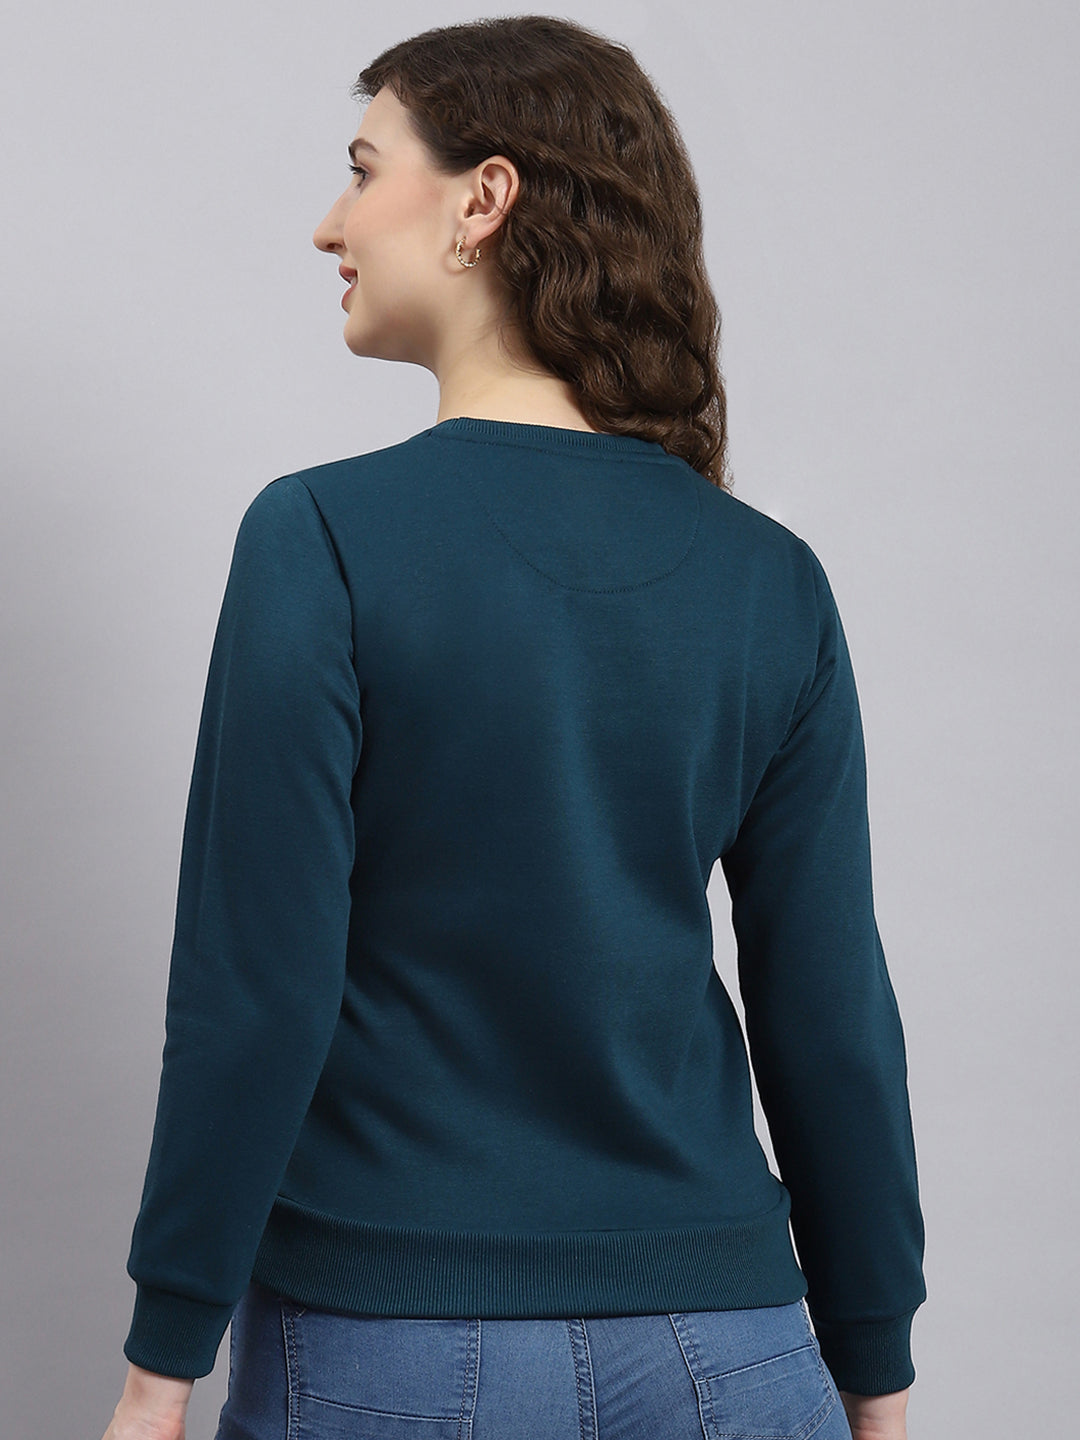 Women Teal Blue Printed Round Neck Full Sleeve Sweatshirt